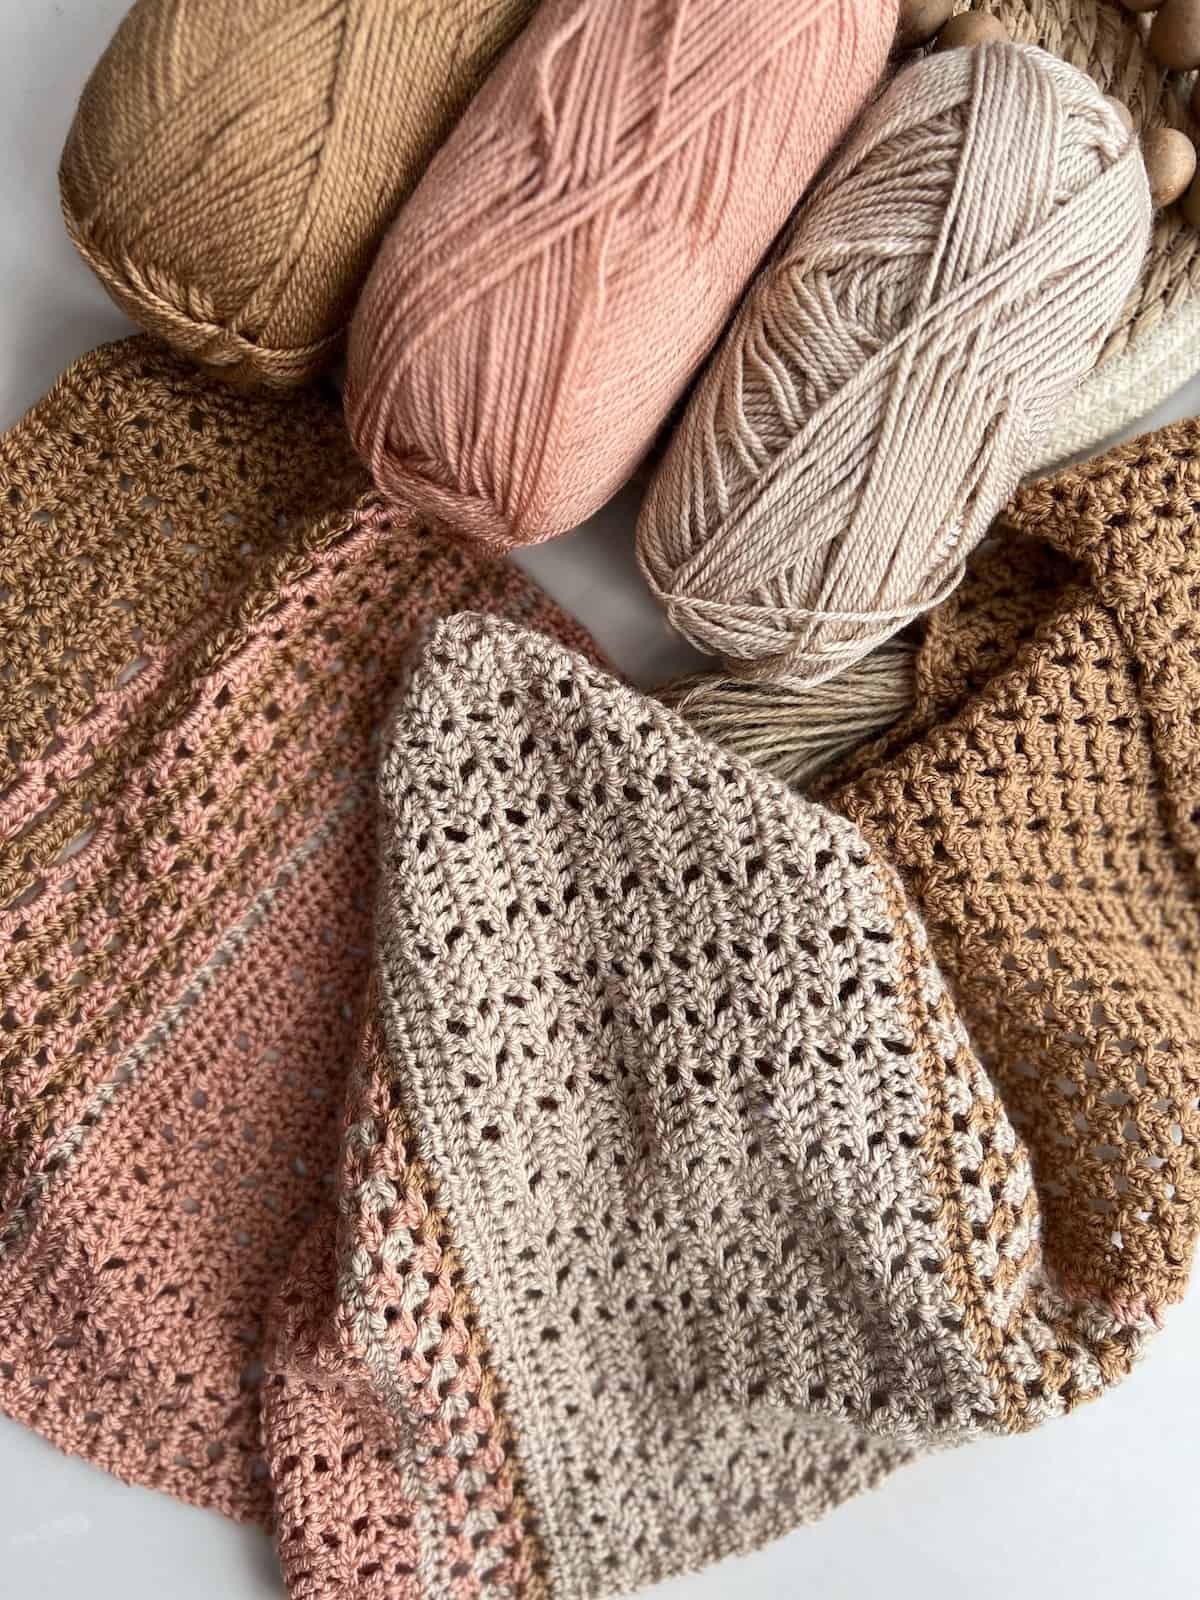 Feminine crochet scarf pattern laid on table with 3 balls of yarn.